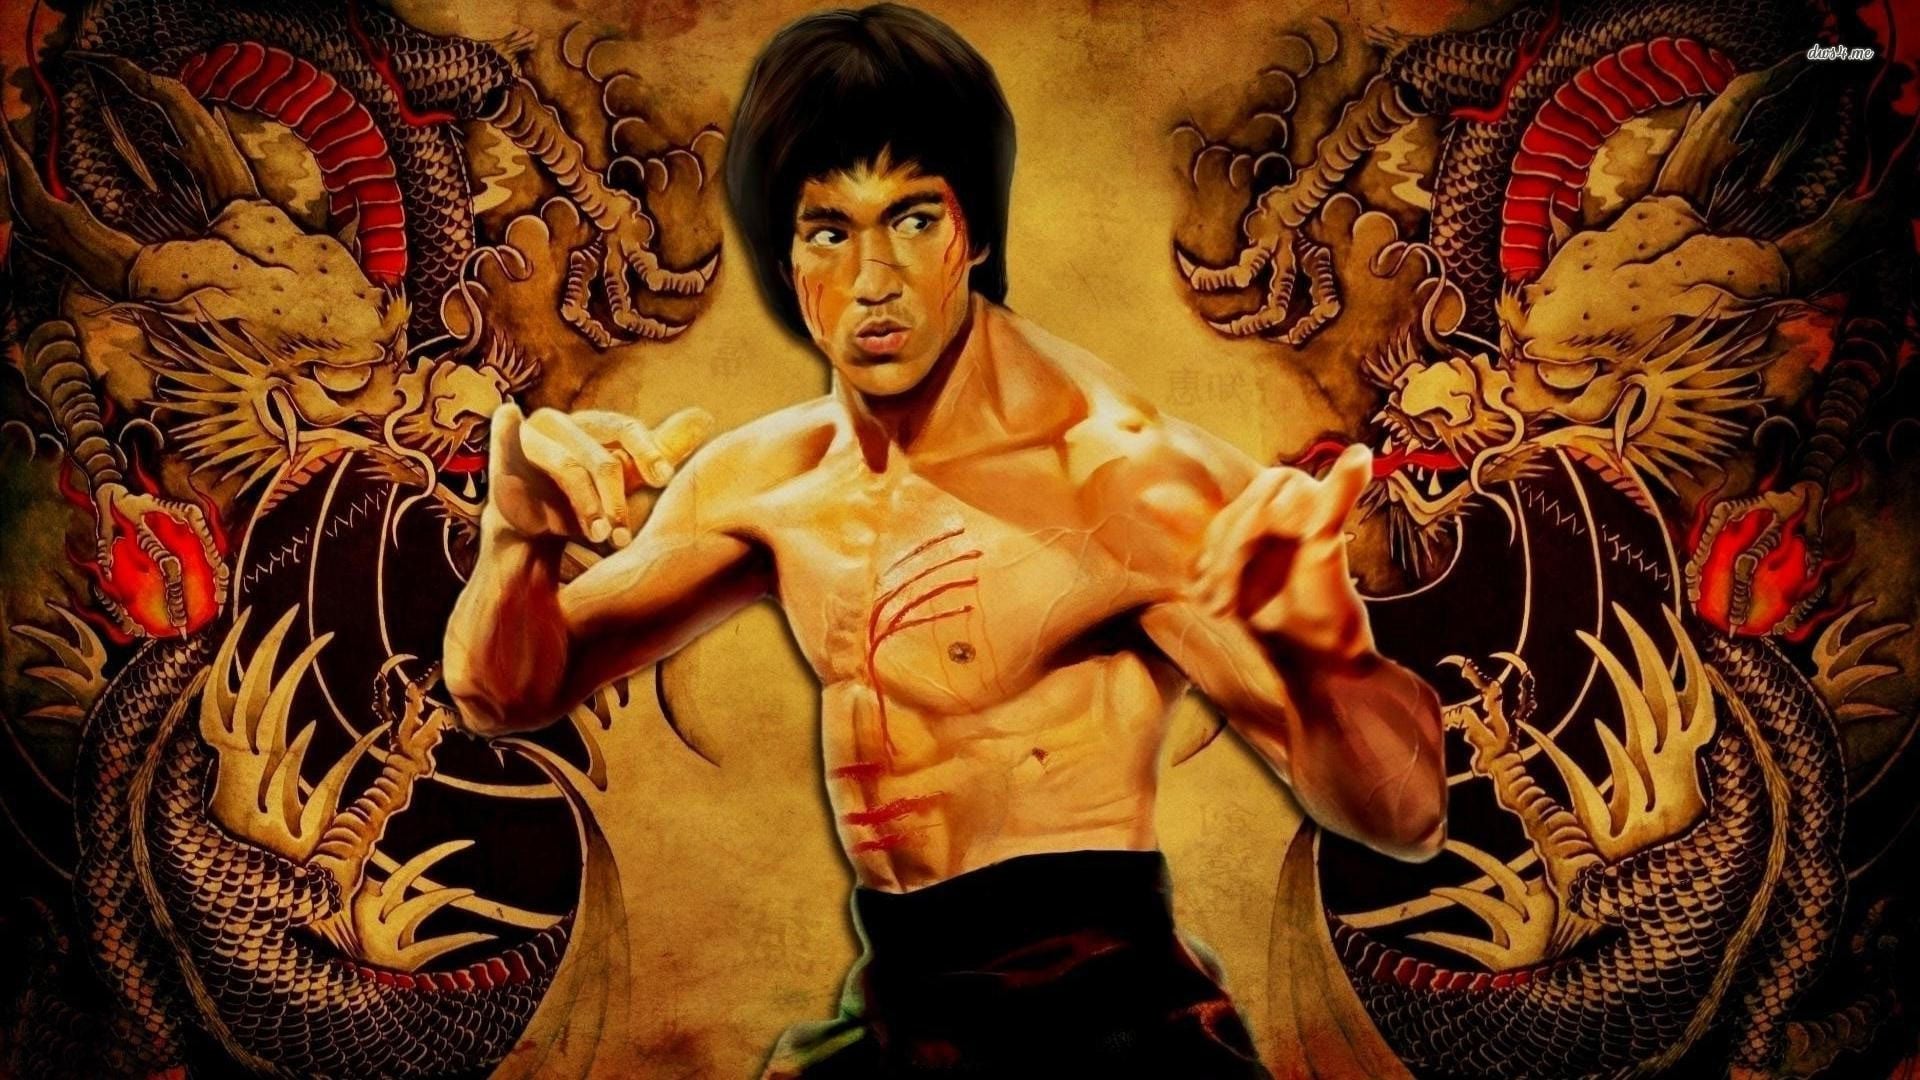 Bruce Lee: The Legend (1984)